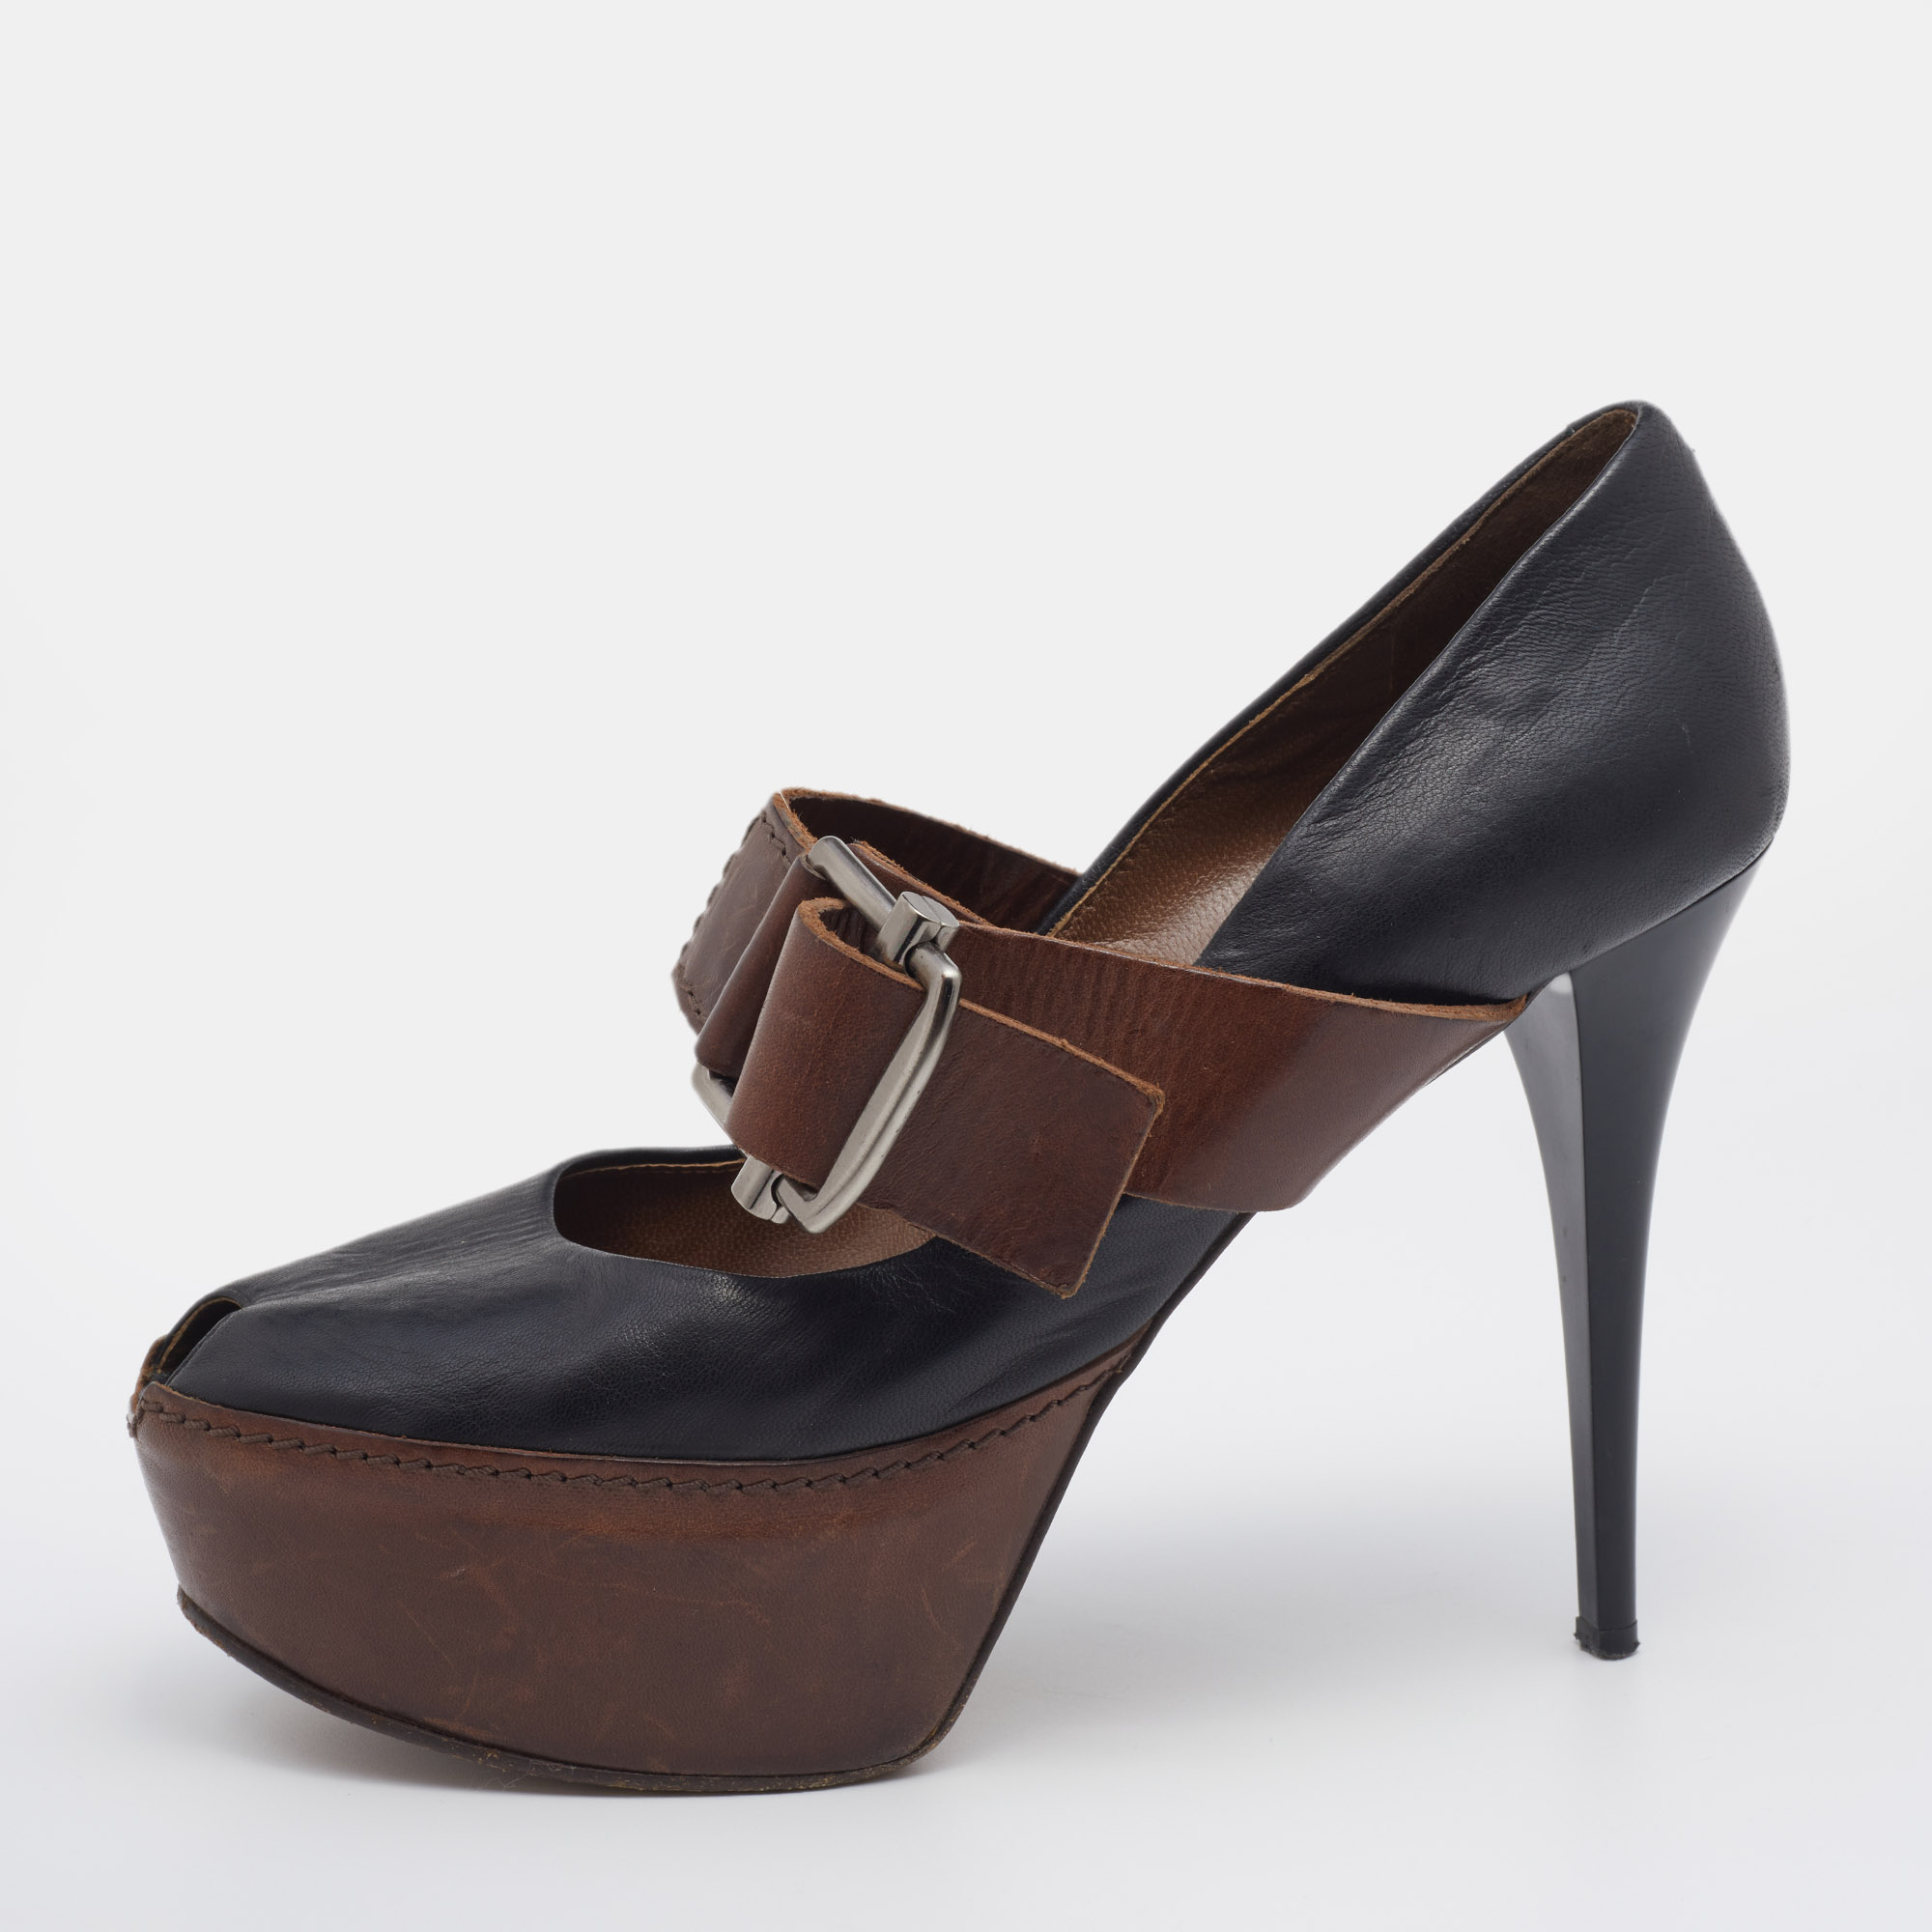 Marni black/brown leather mary jane peep toe platform pumps size 40